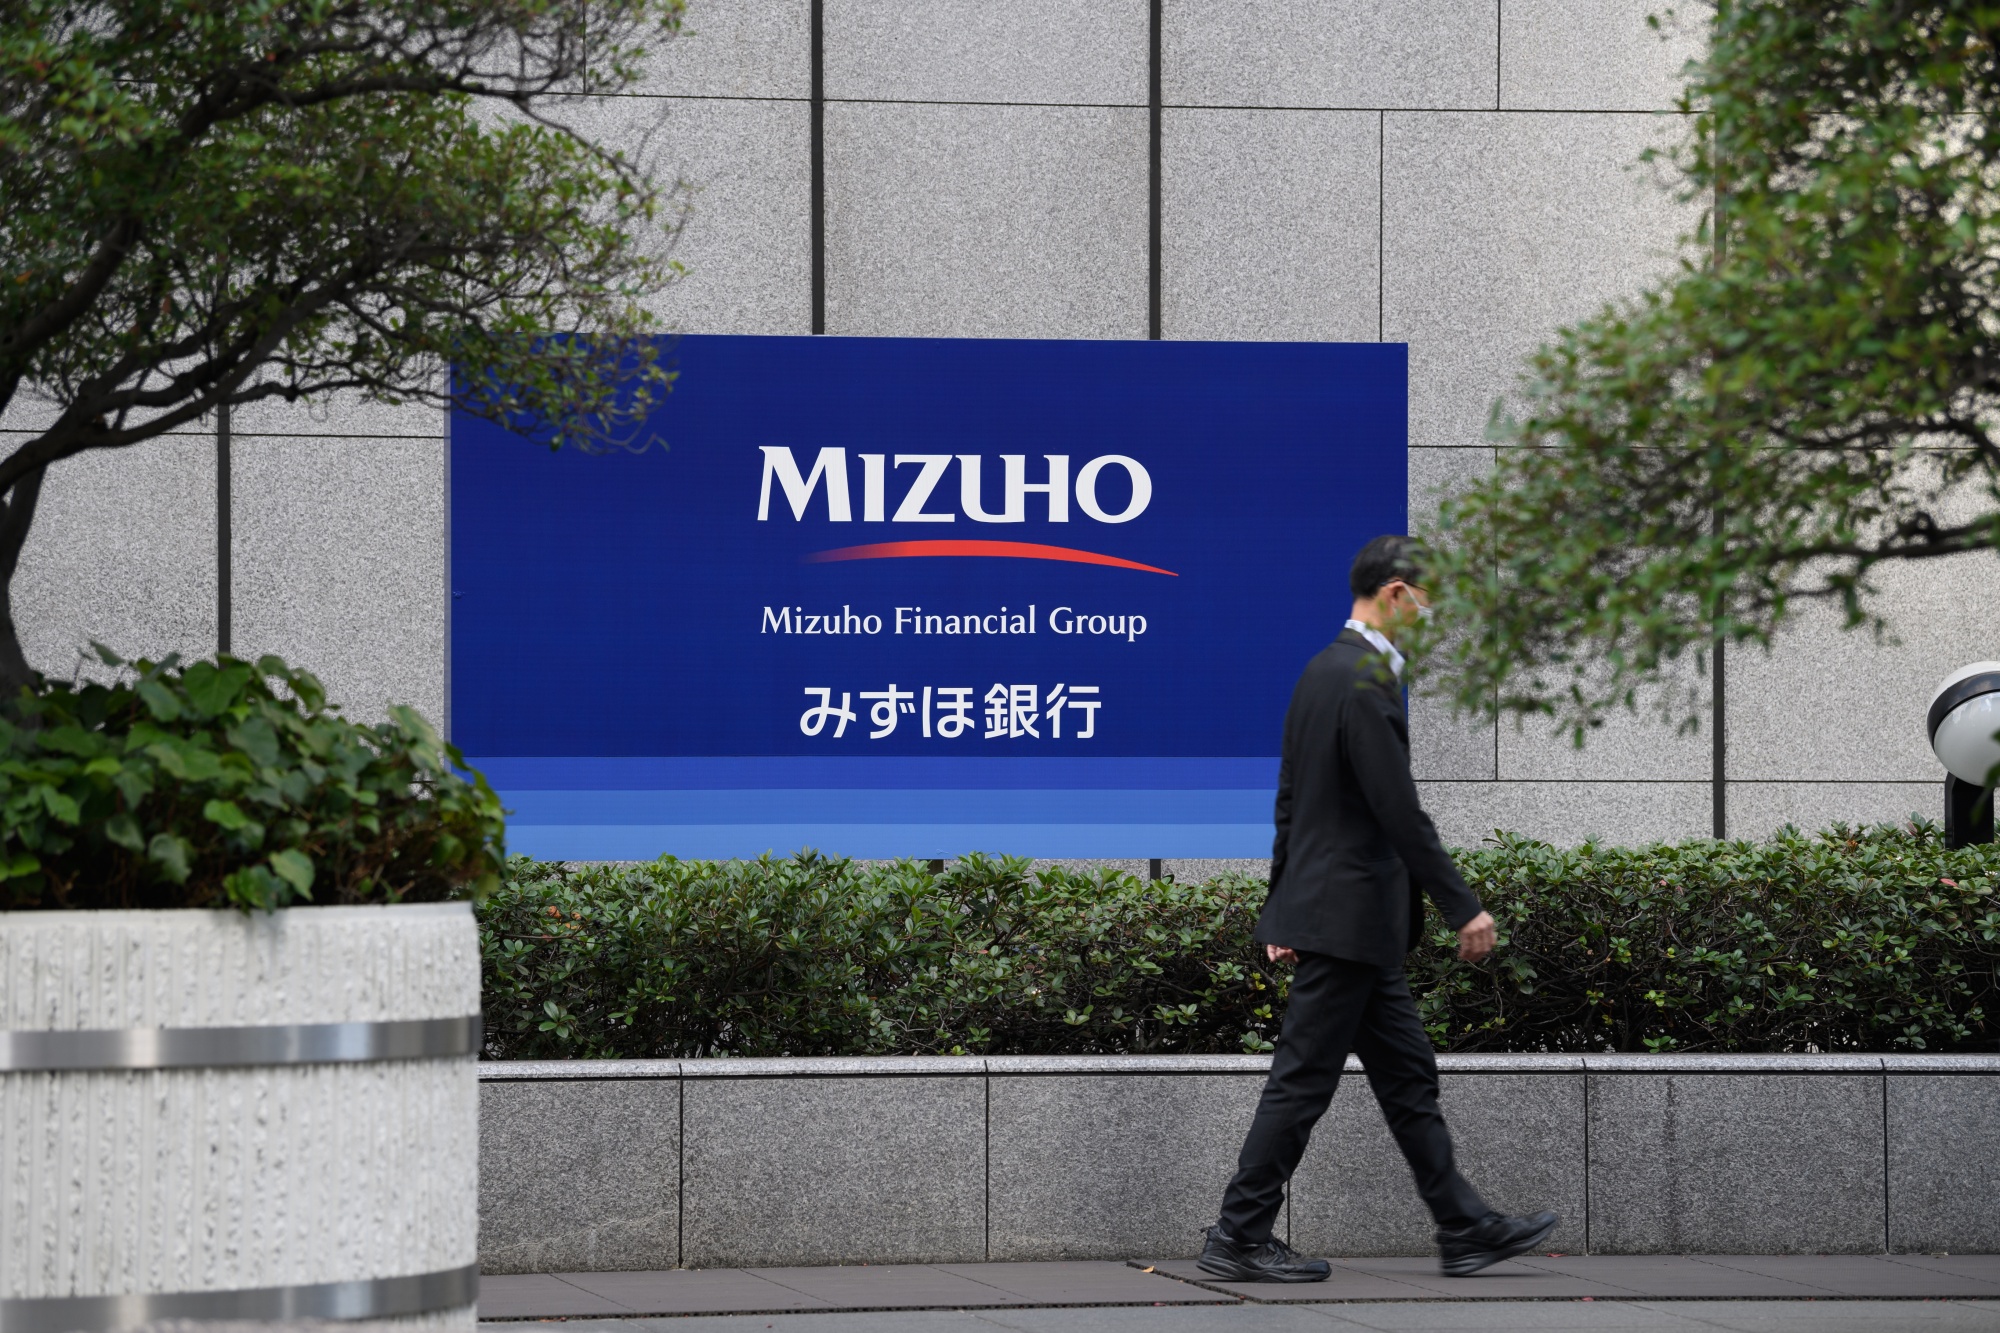 Mizuho Financial (8411) to Name Masahiro Kihara as Group CEO, Nikkei Says - Bloomberg